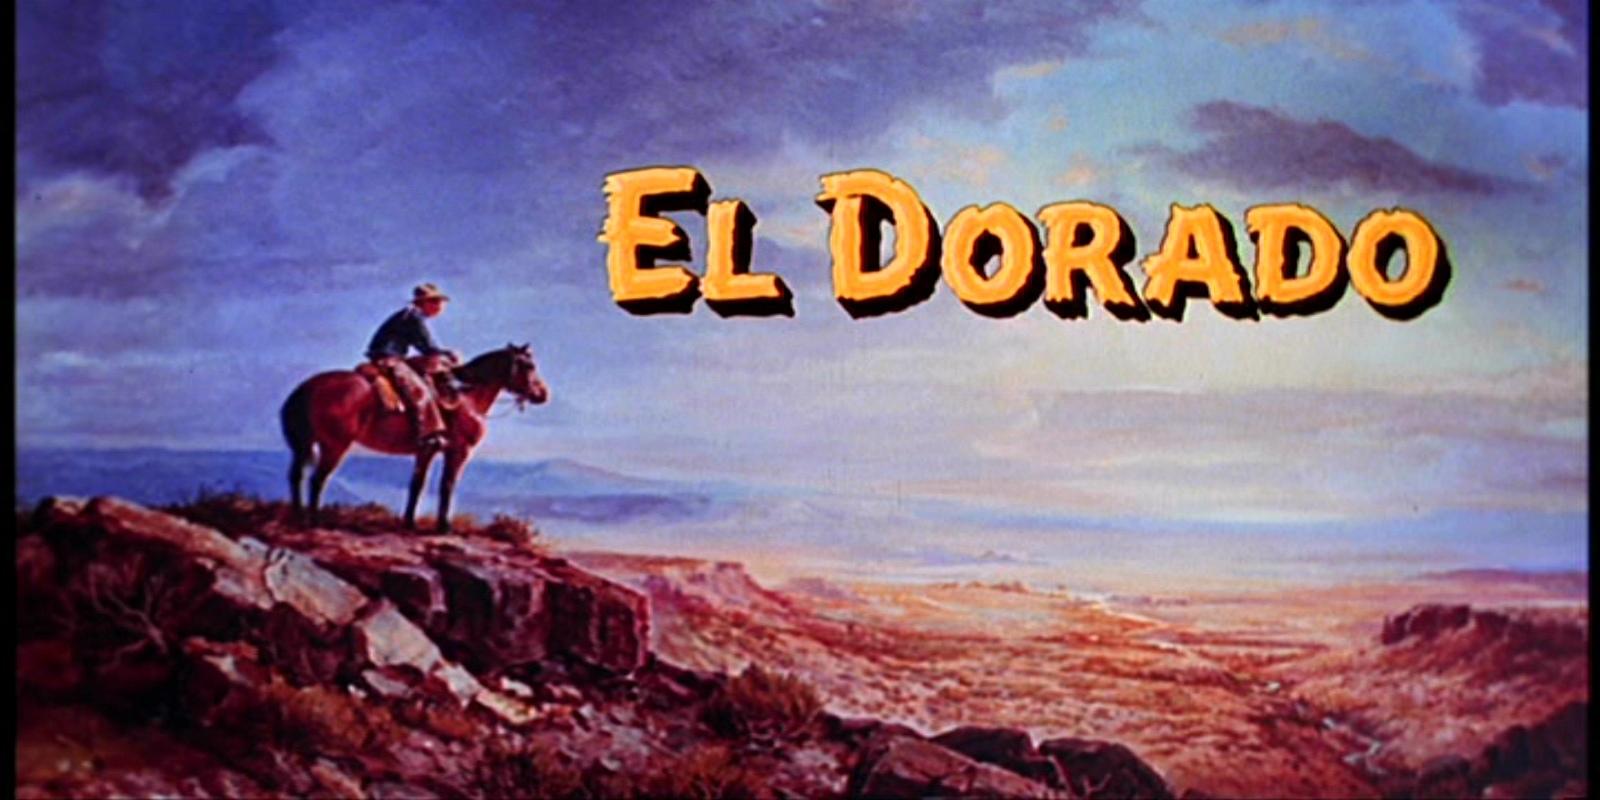 El Dorado at 1024 x 1024 iPad size wallpapers HD quality